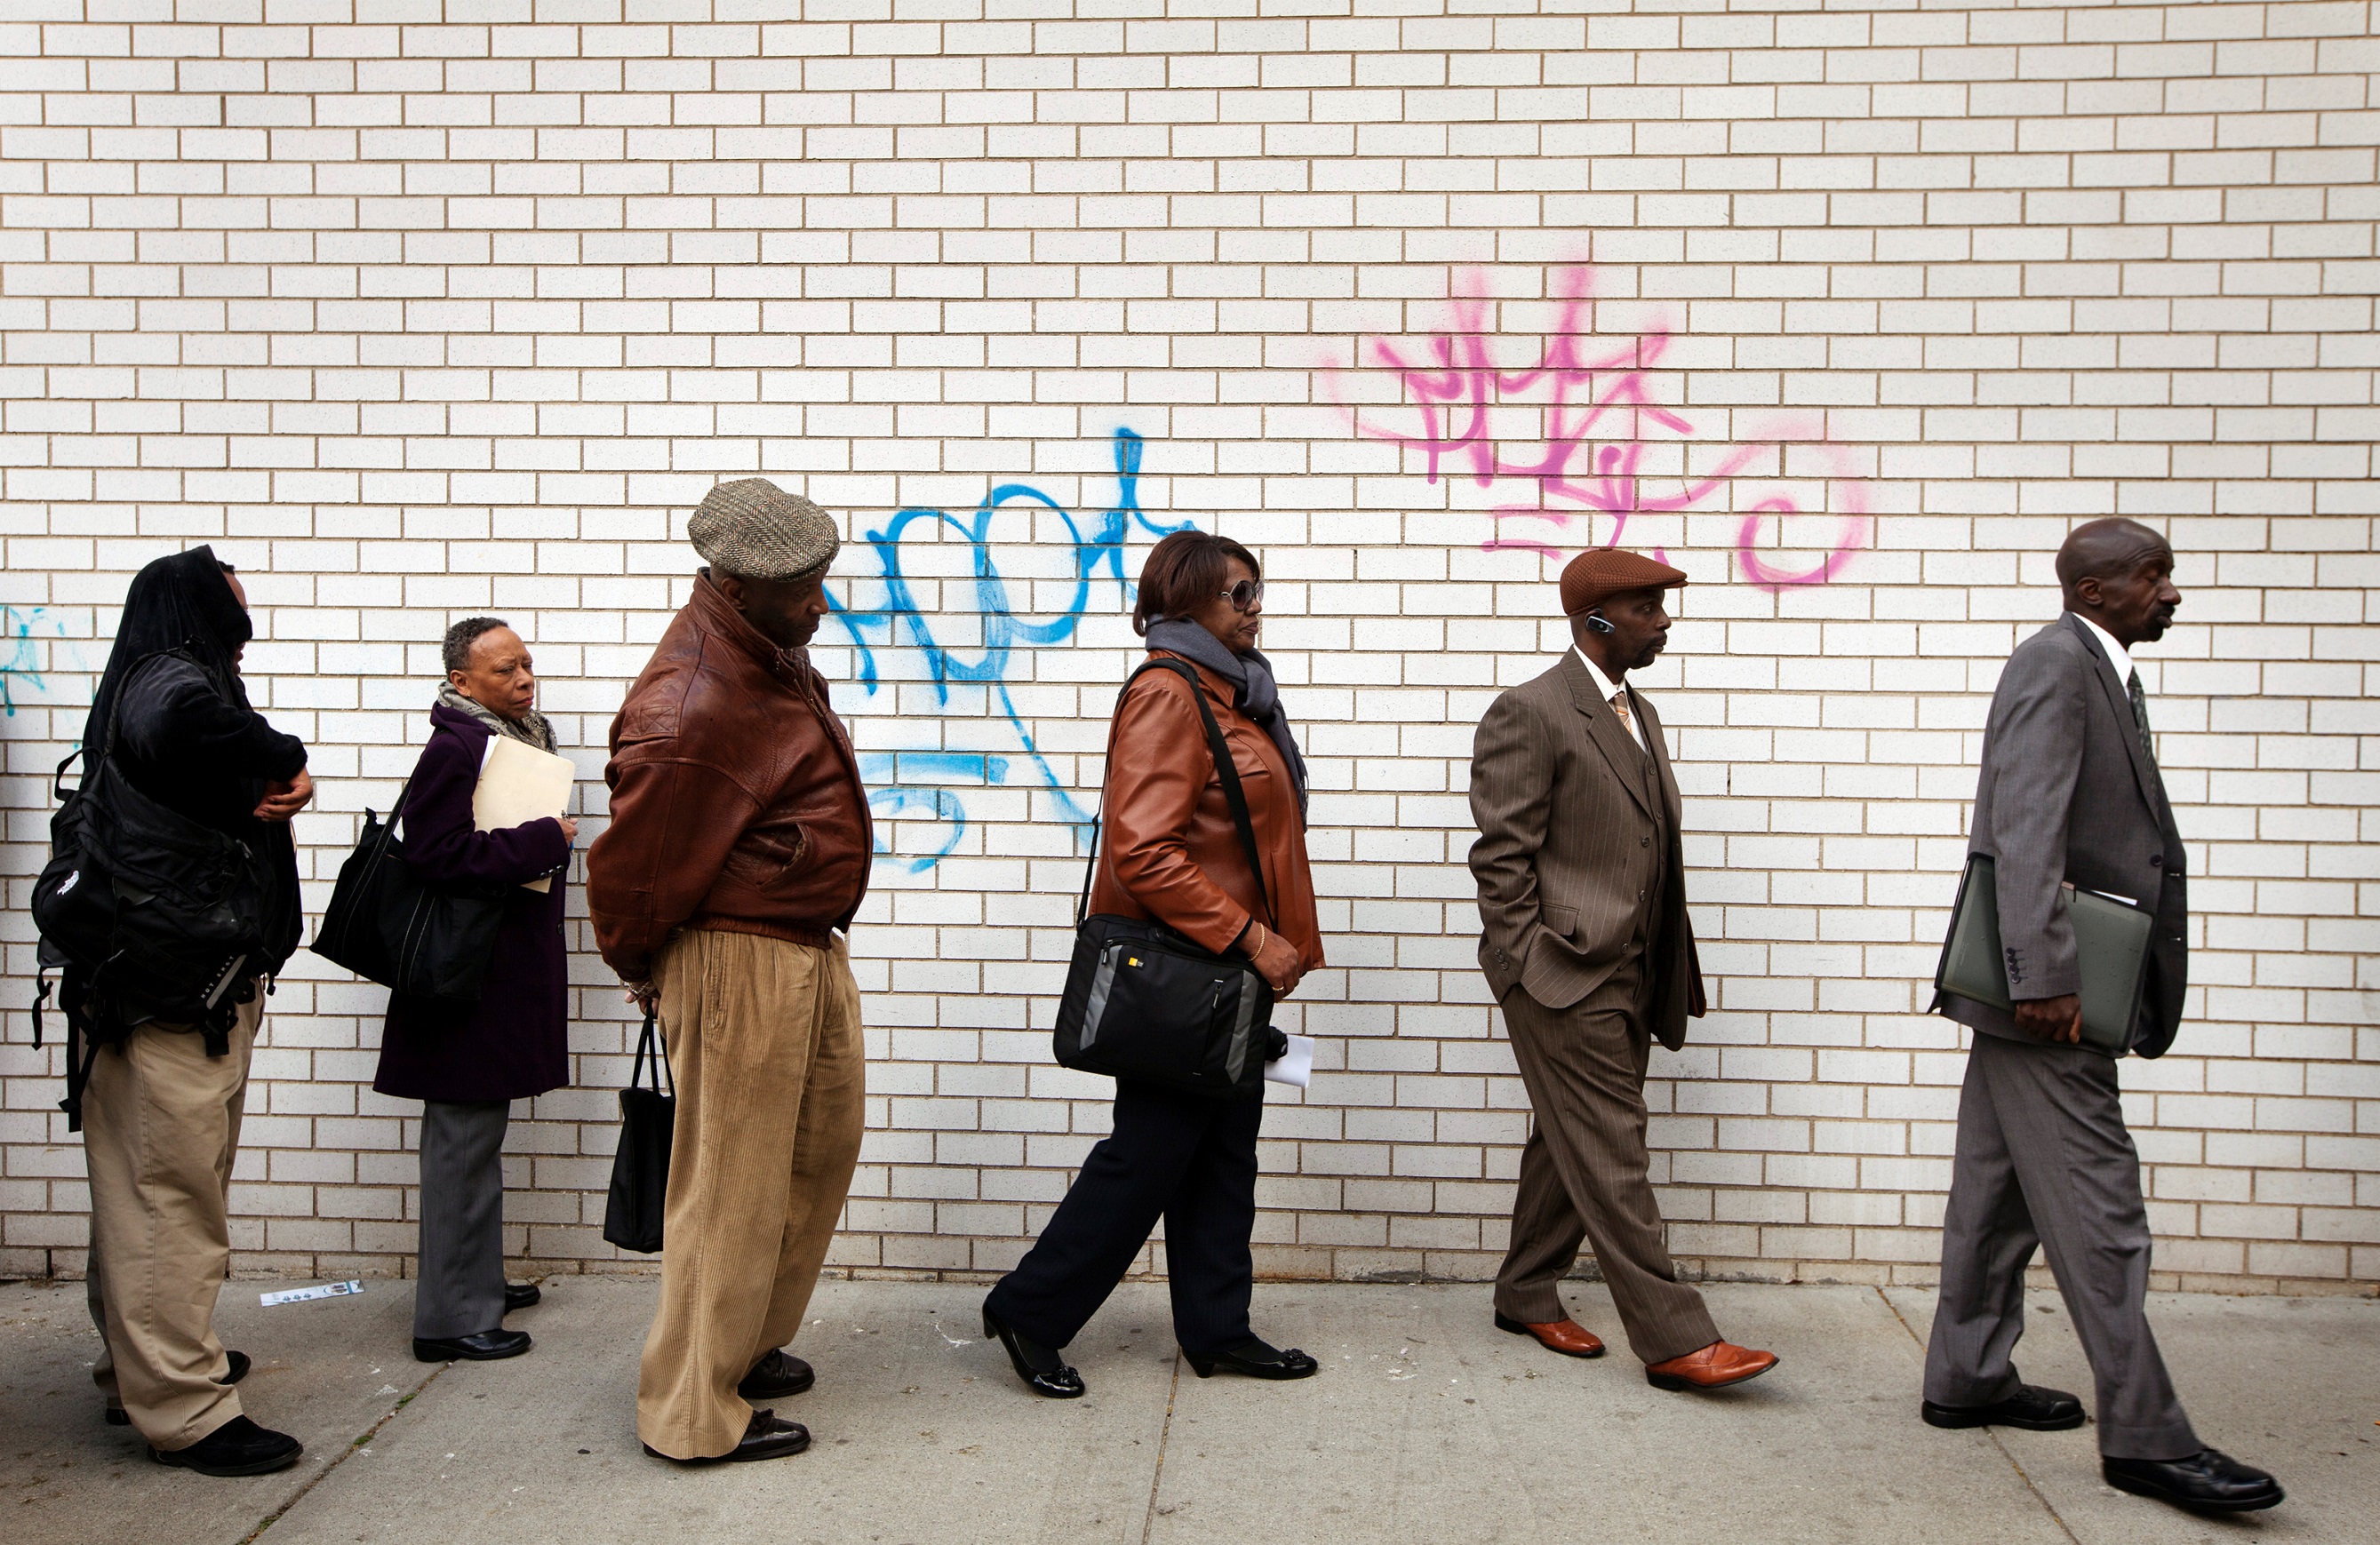 Black Unemployment 94% Higher Than White Americans